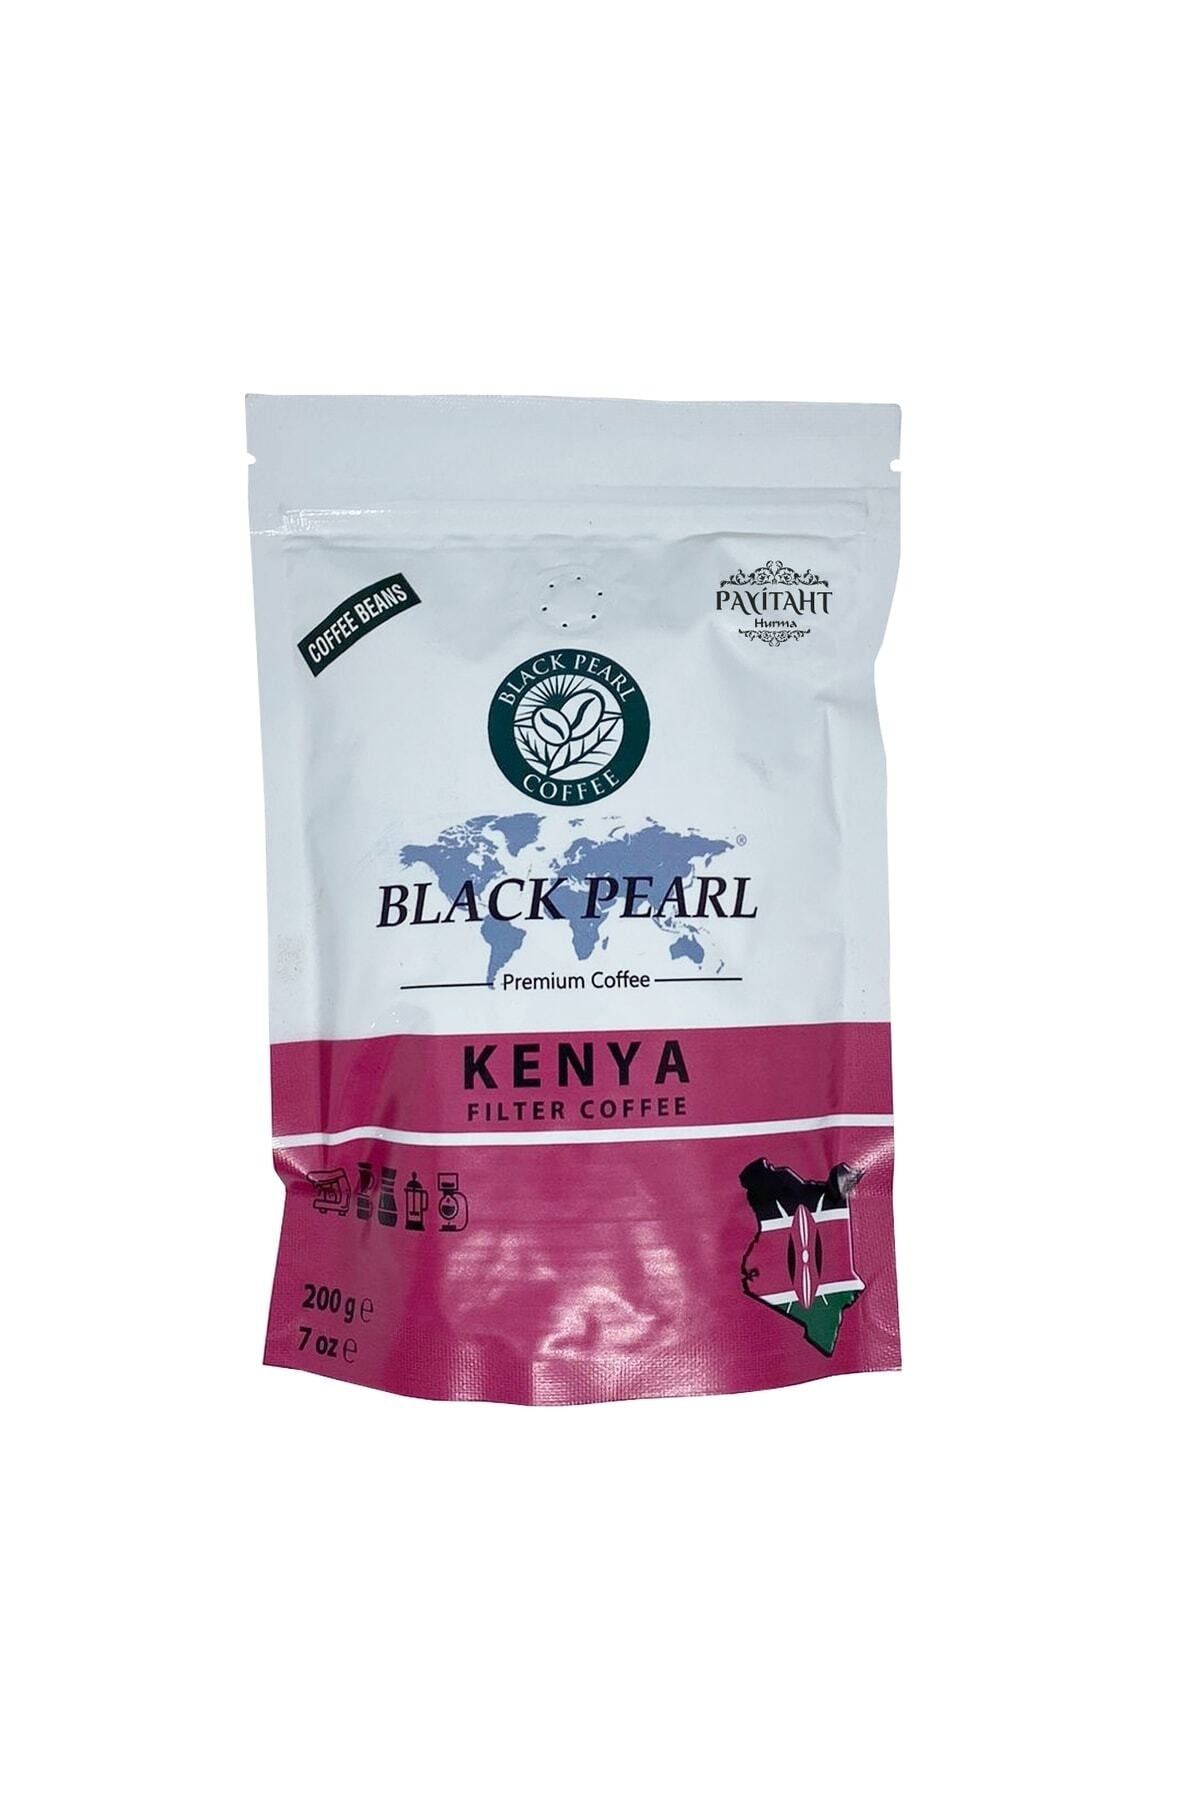 payitaht hurma Black Pearl - Kenya Filtre Kahve 200 gr